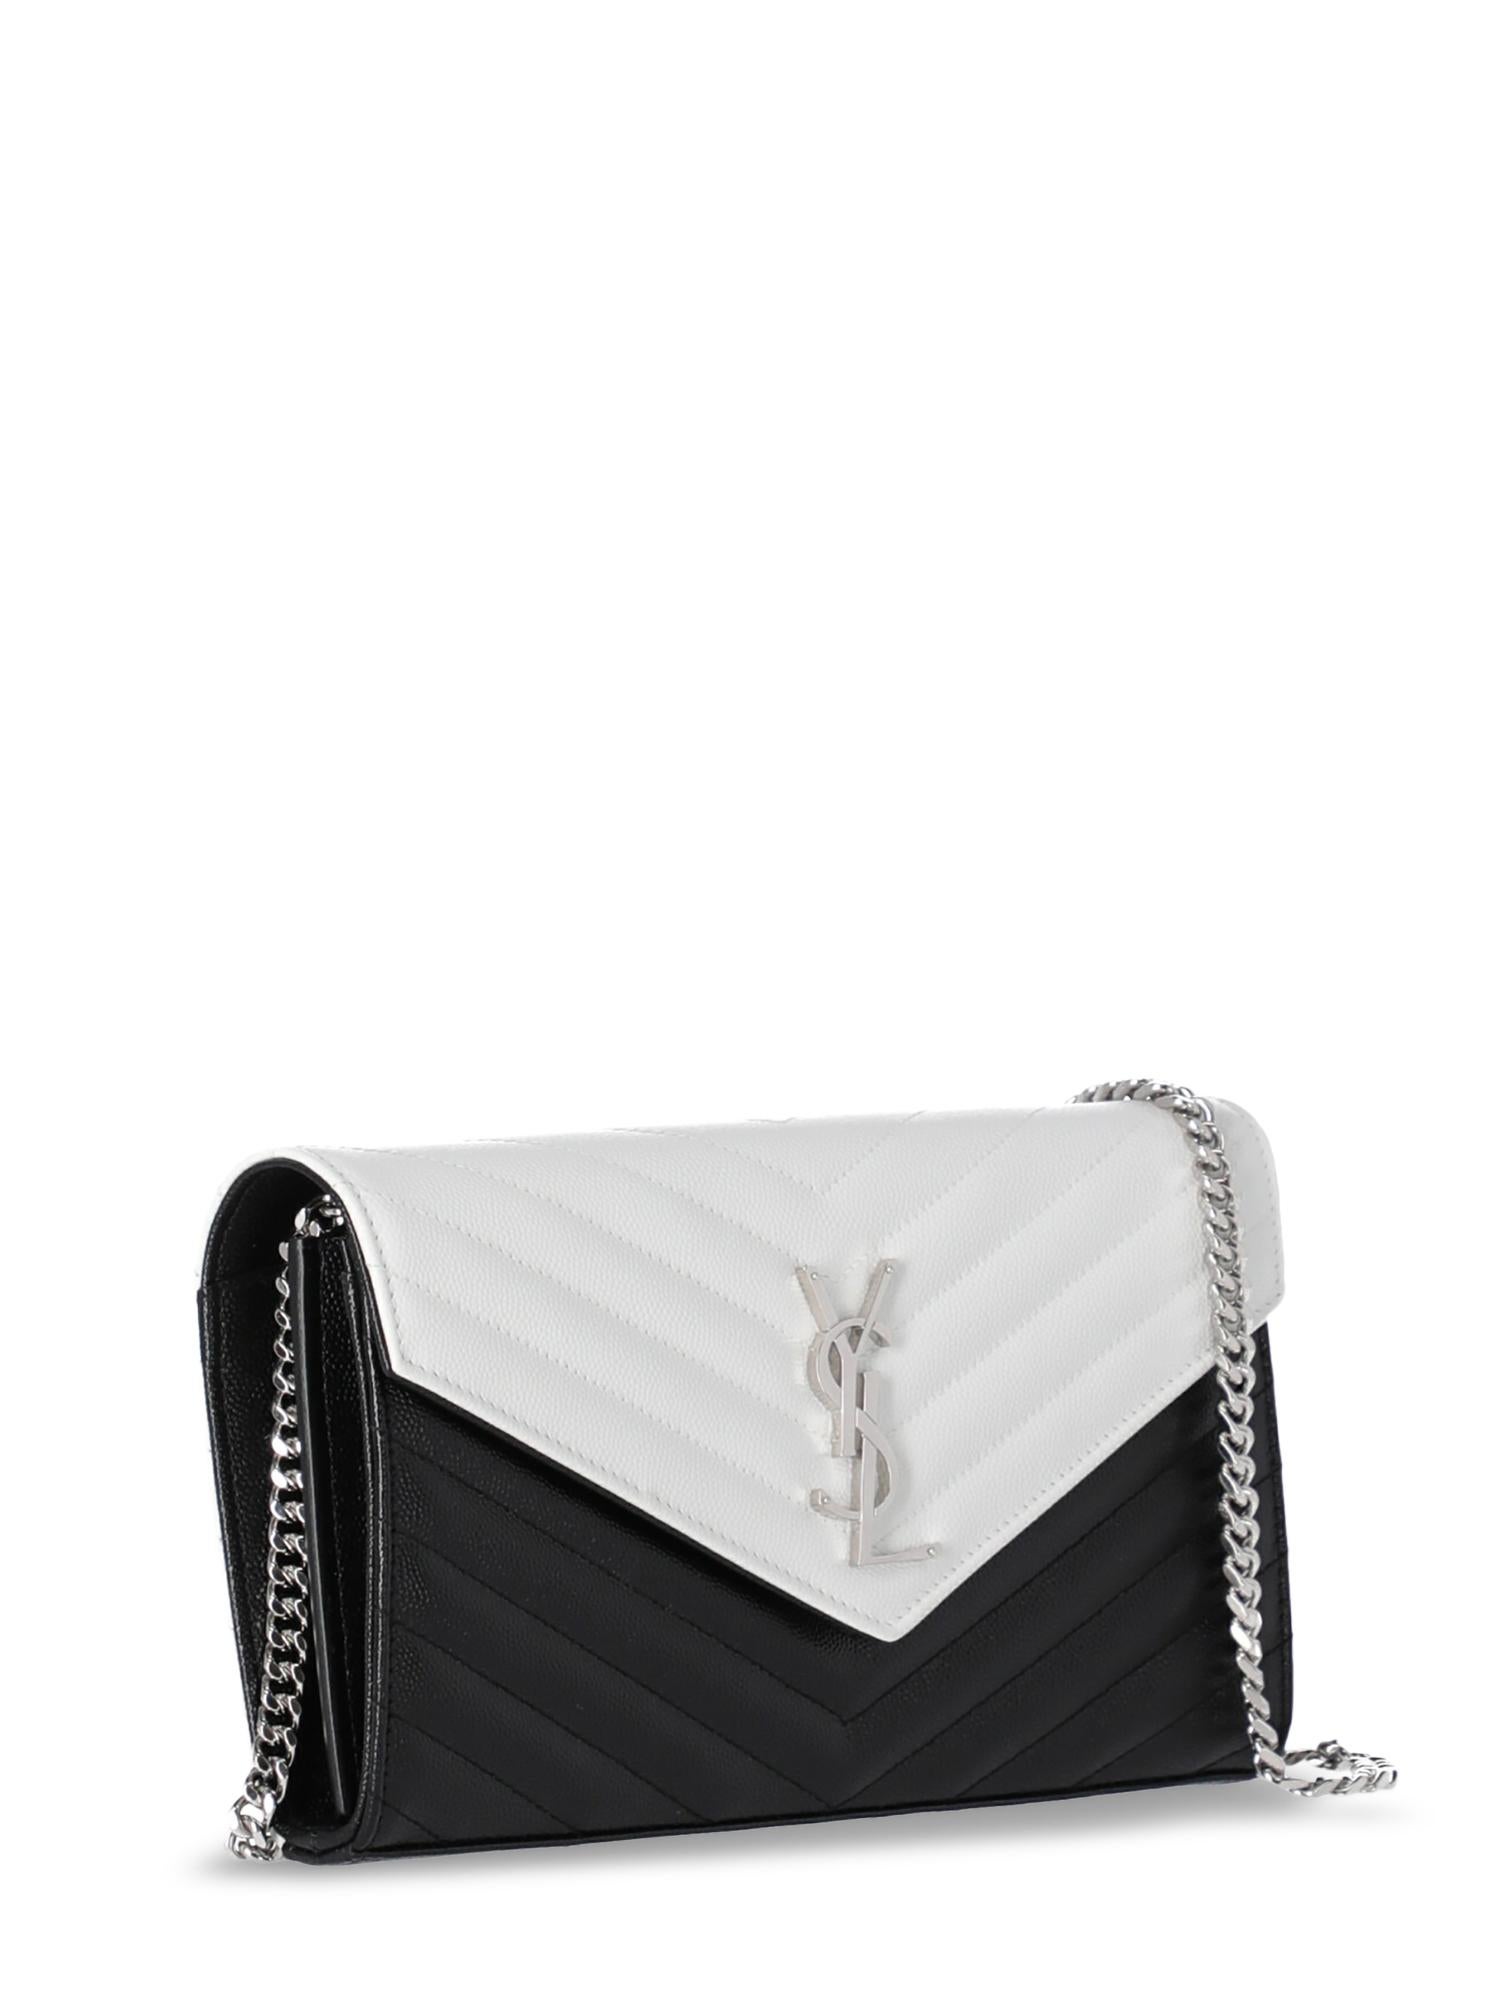 Gray Saint Laurent Women's Shoulder Bag Black/White Leather  For Sale